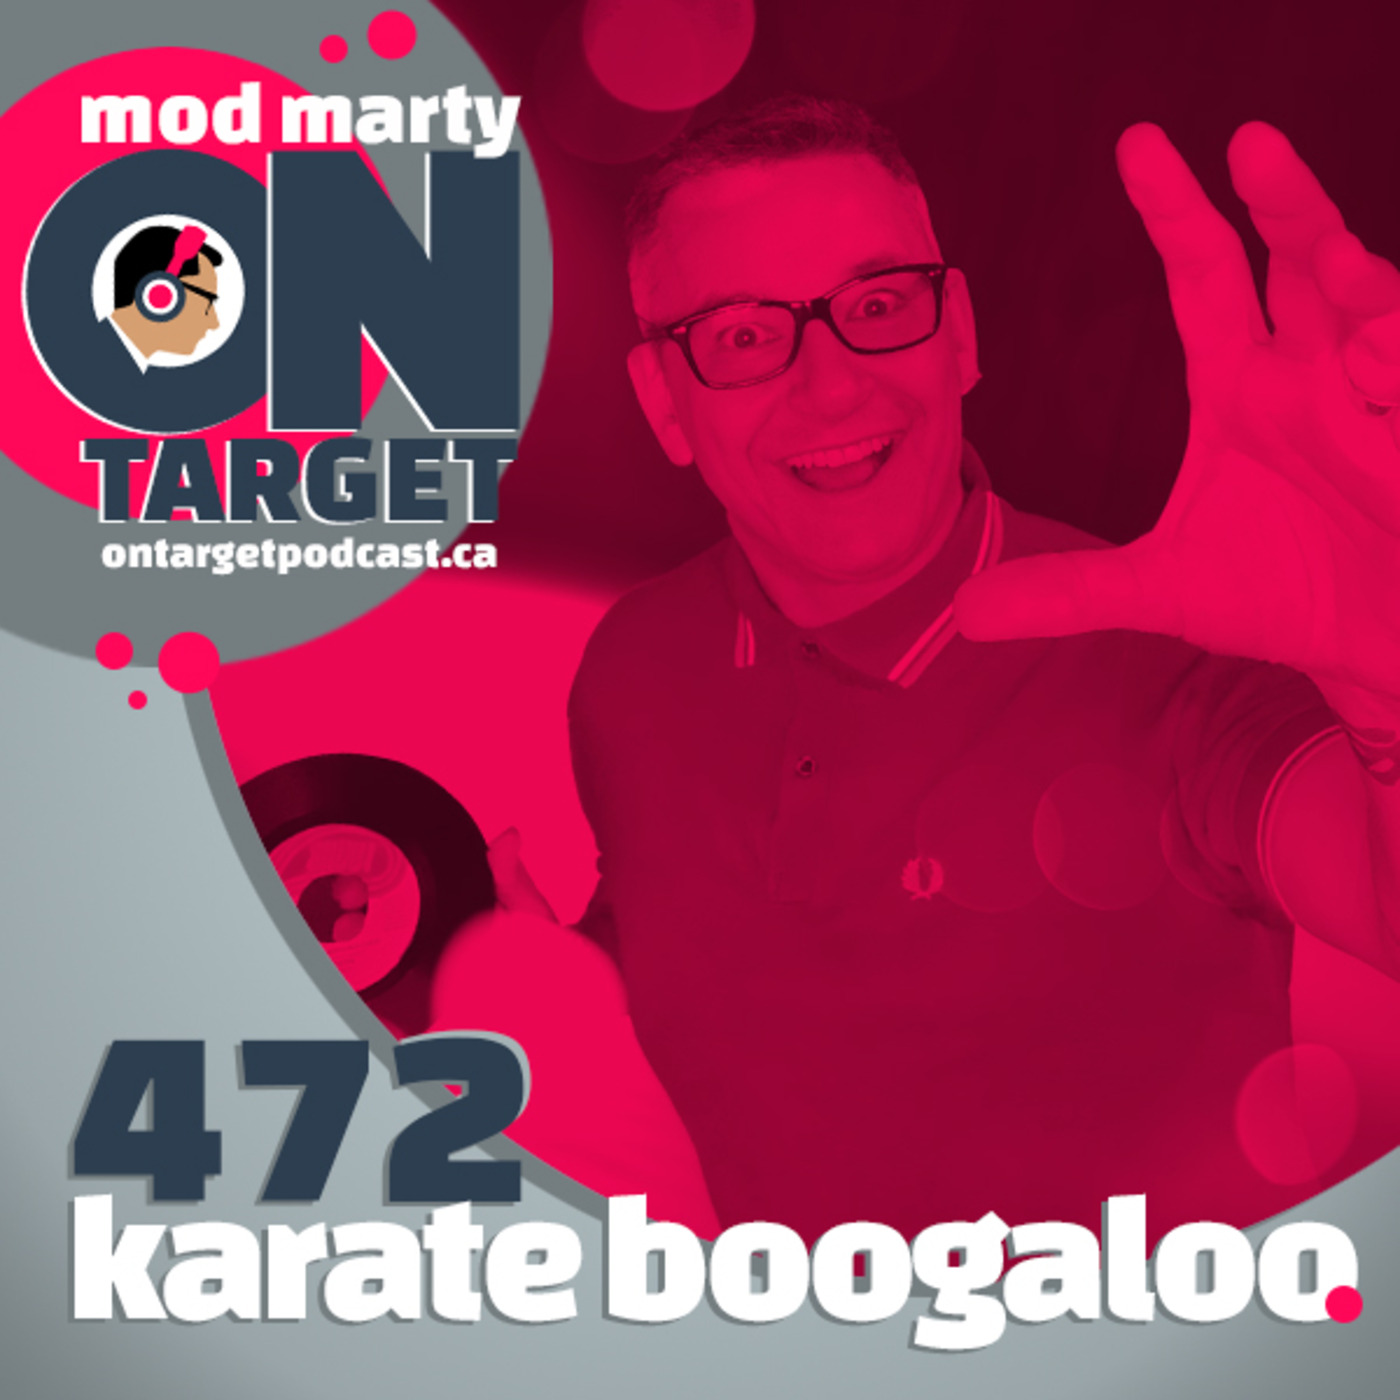 Episode 472: Karate Boogaloo